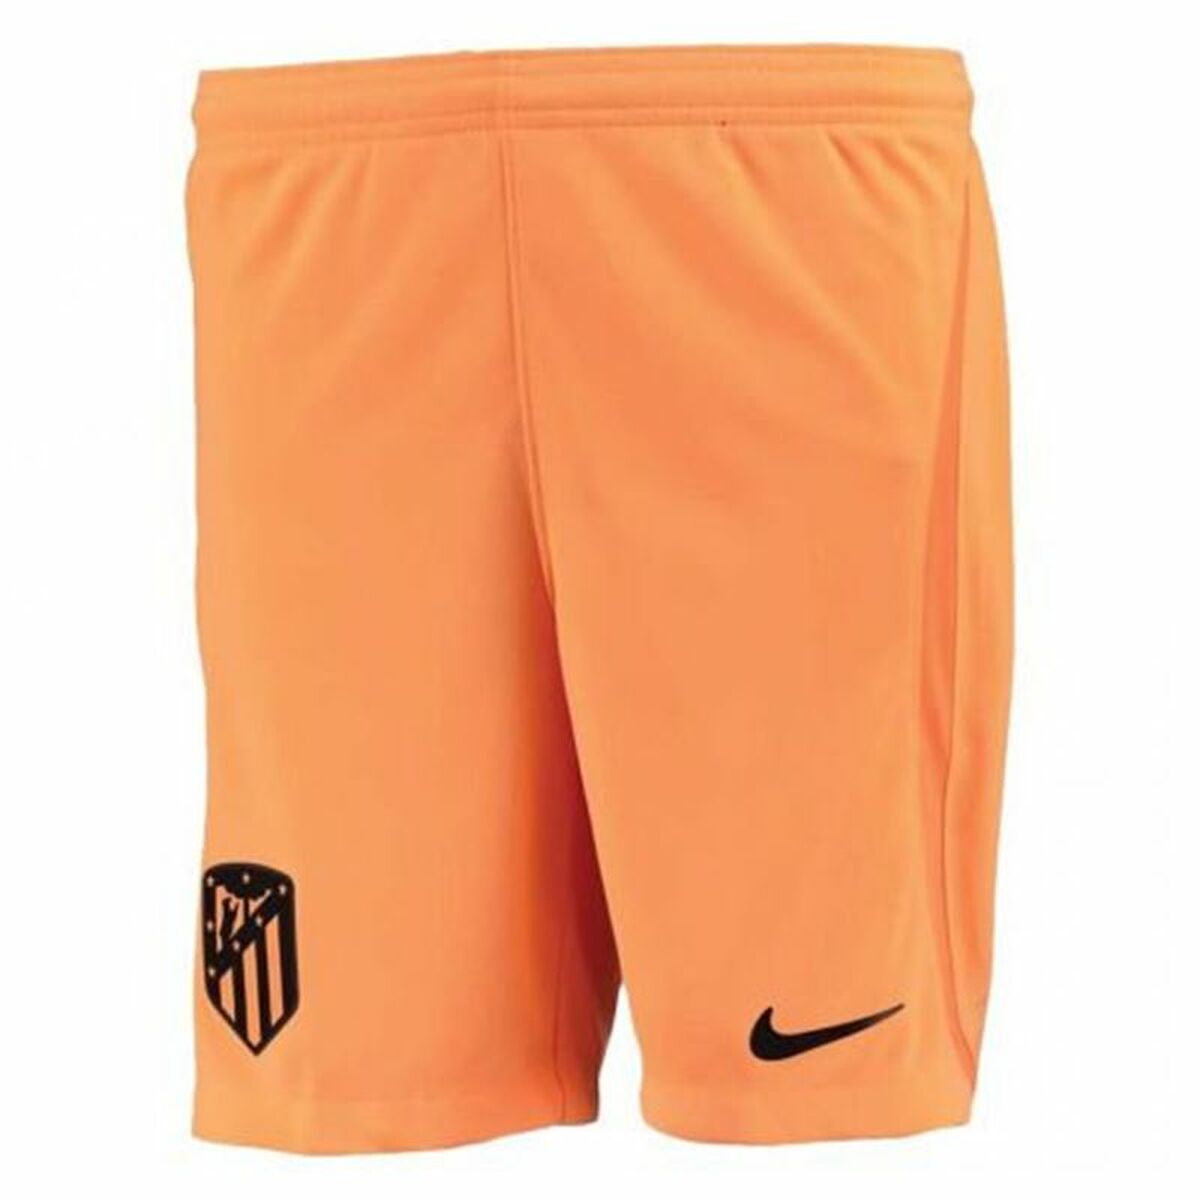 Short de Sport Nike Atlético Madrid Orange